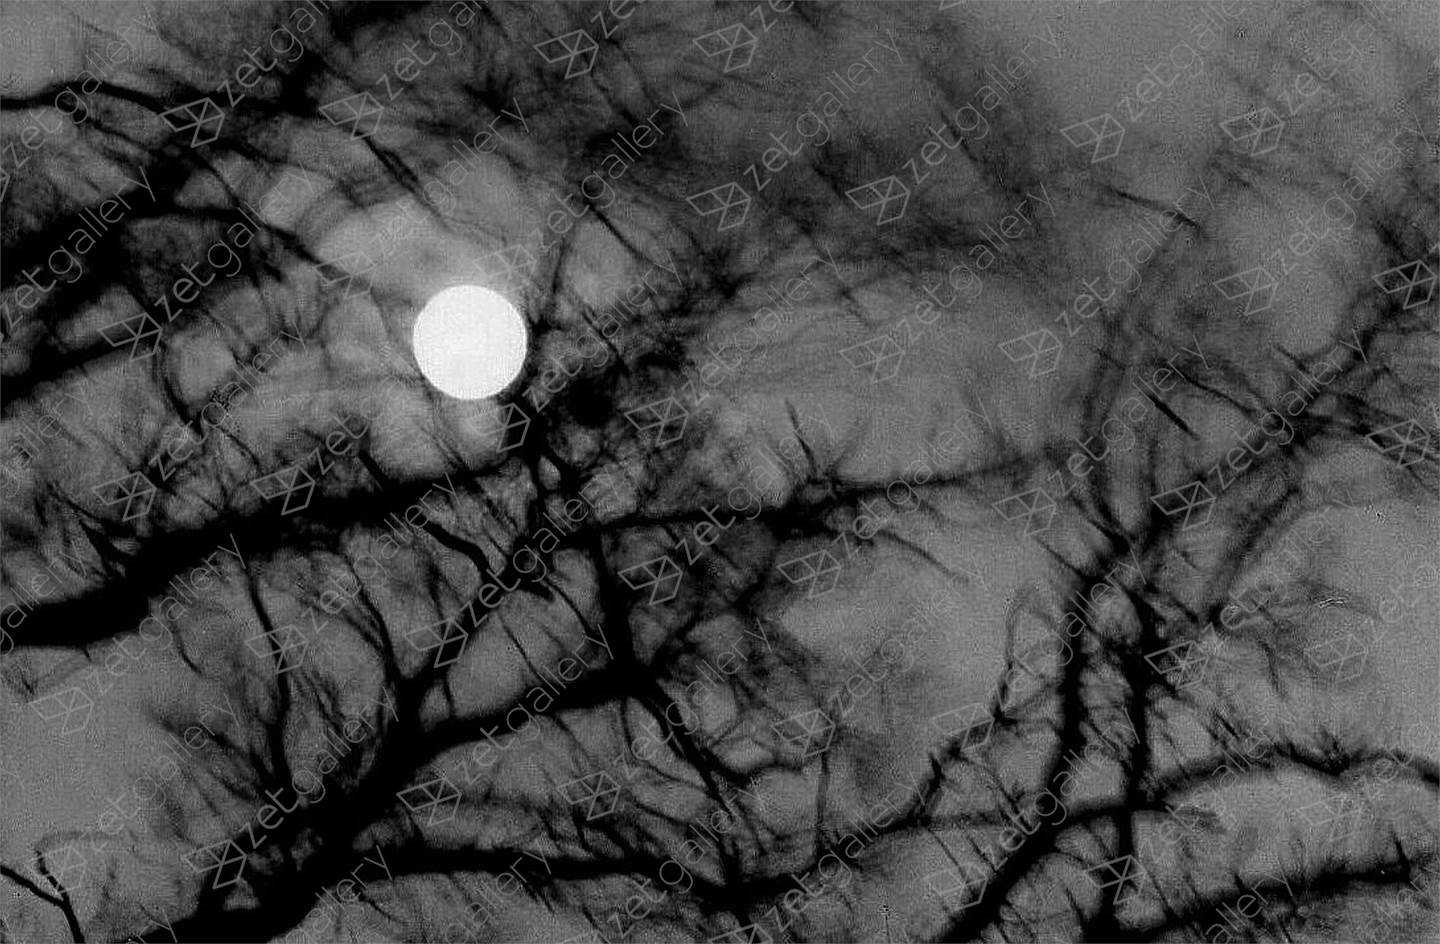 Full-Moon-Night, original B&W Analog Photography by Heinz Baade